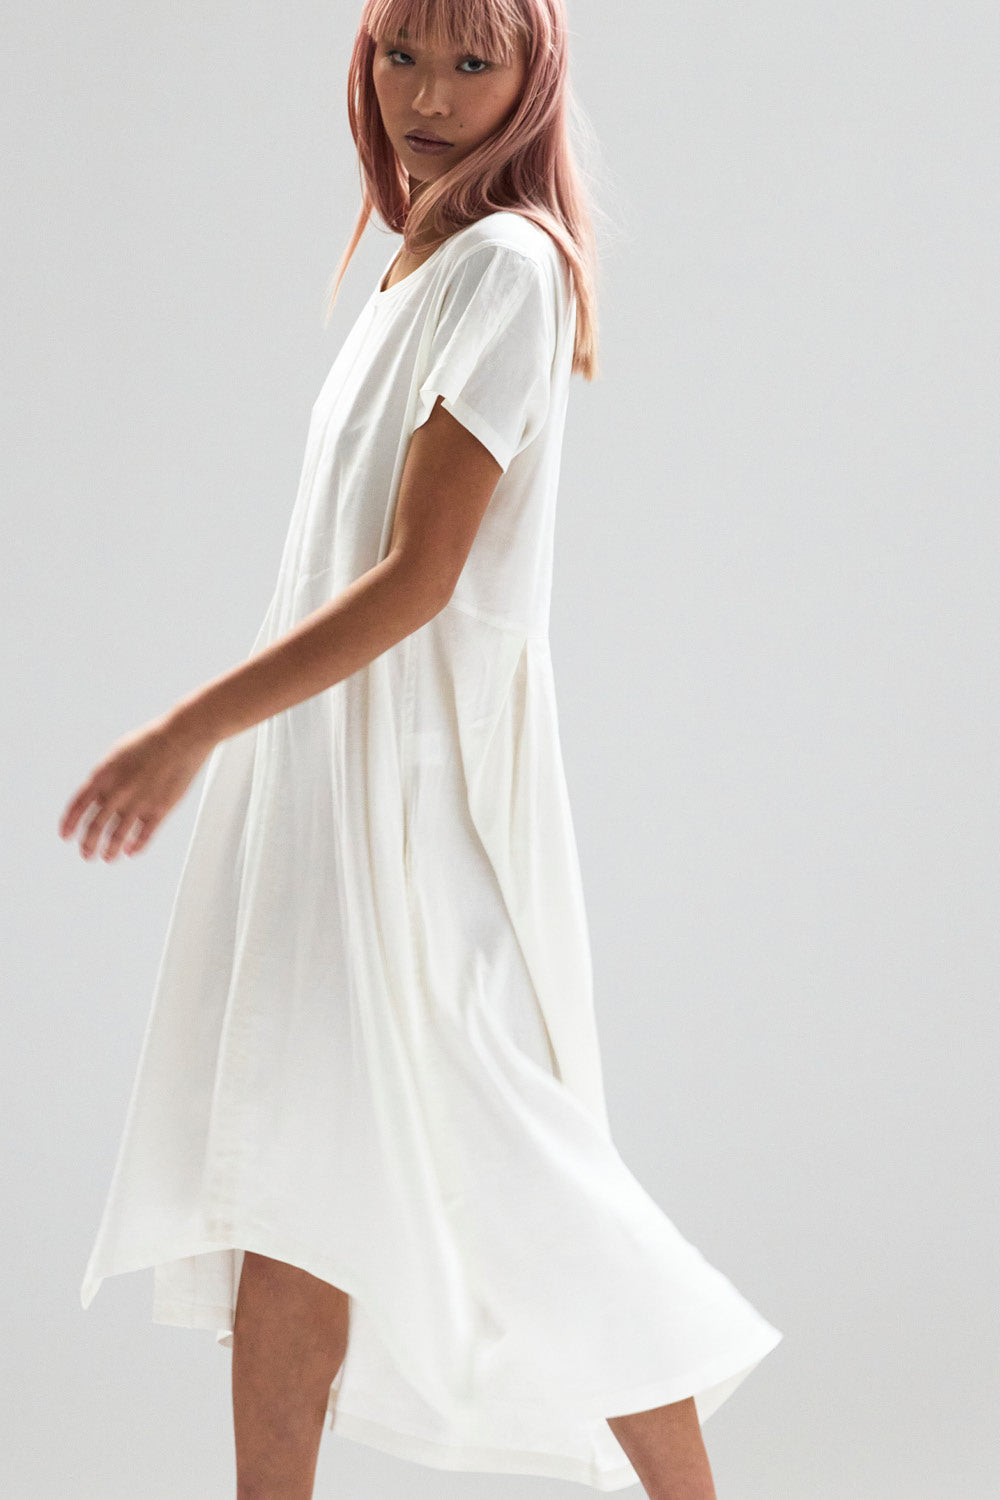 Tokyo Dress - Ivory